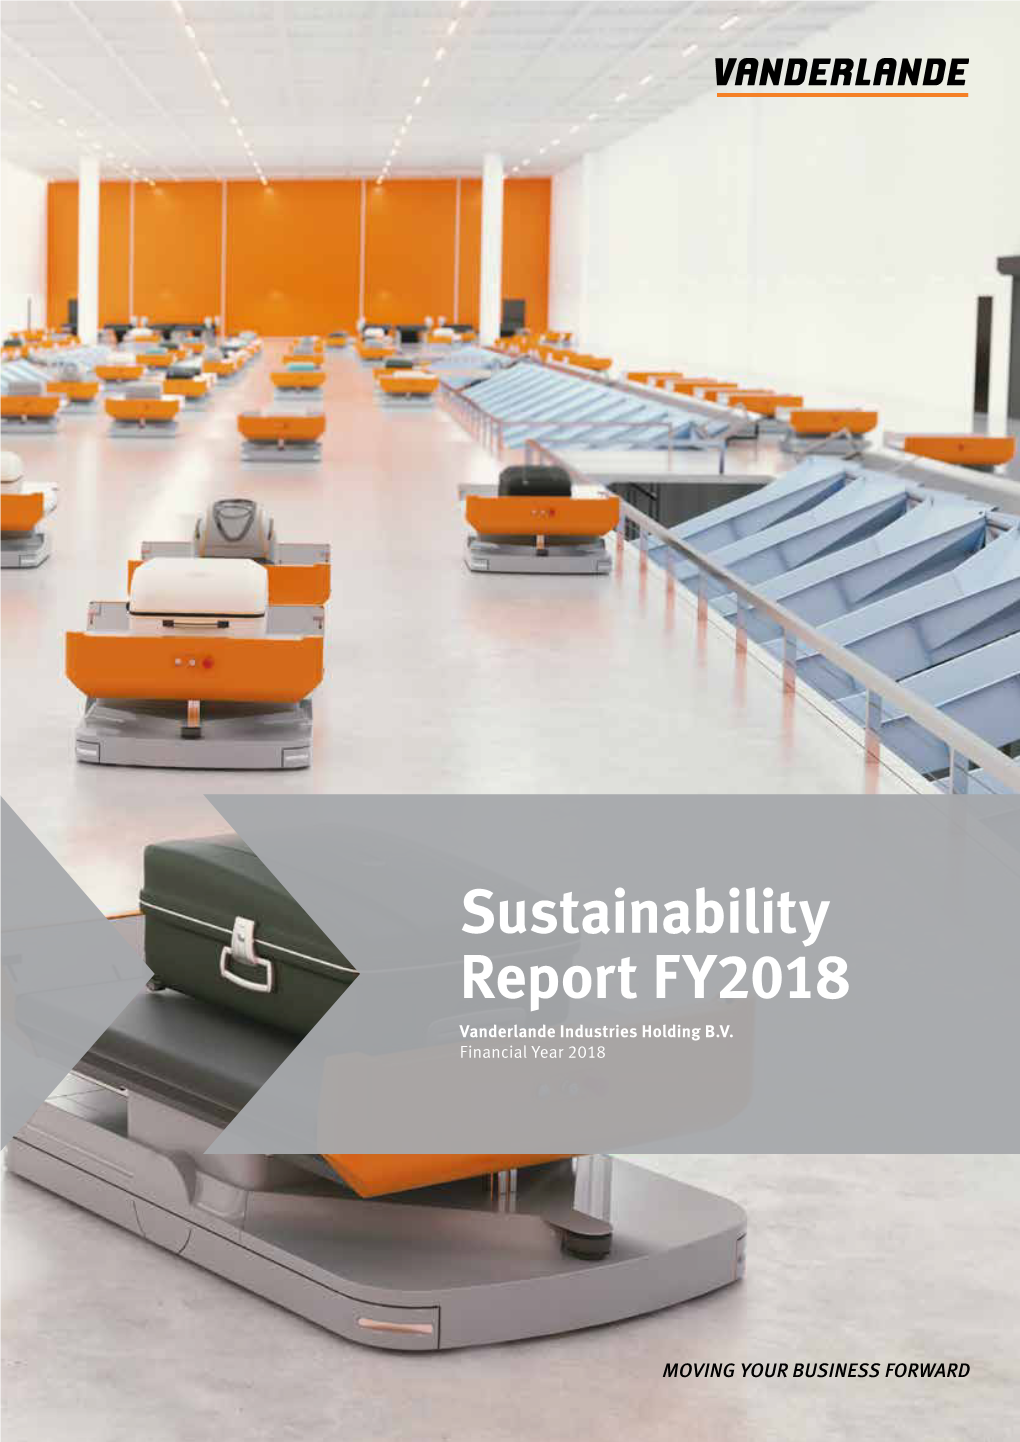 Sustainability Report FY2018 Vanderlande Industries Holding B.V